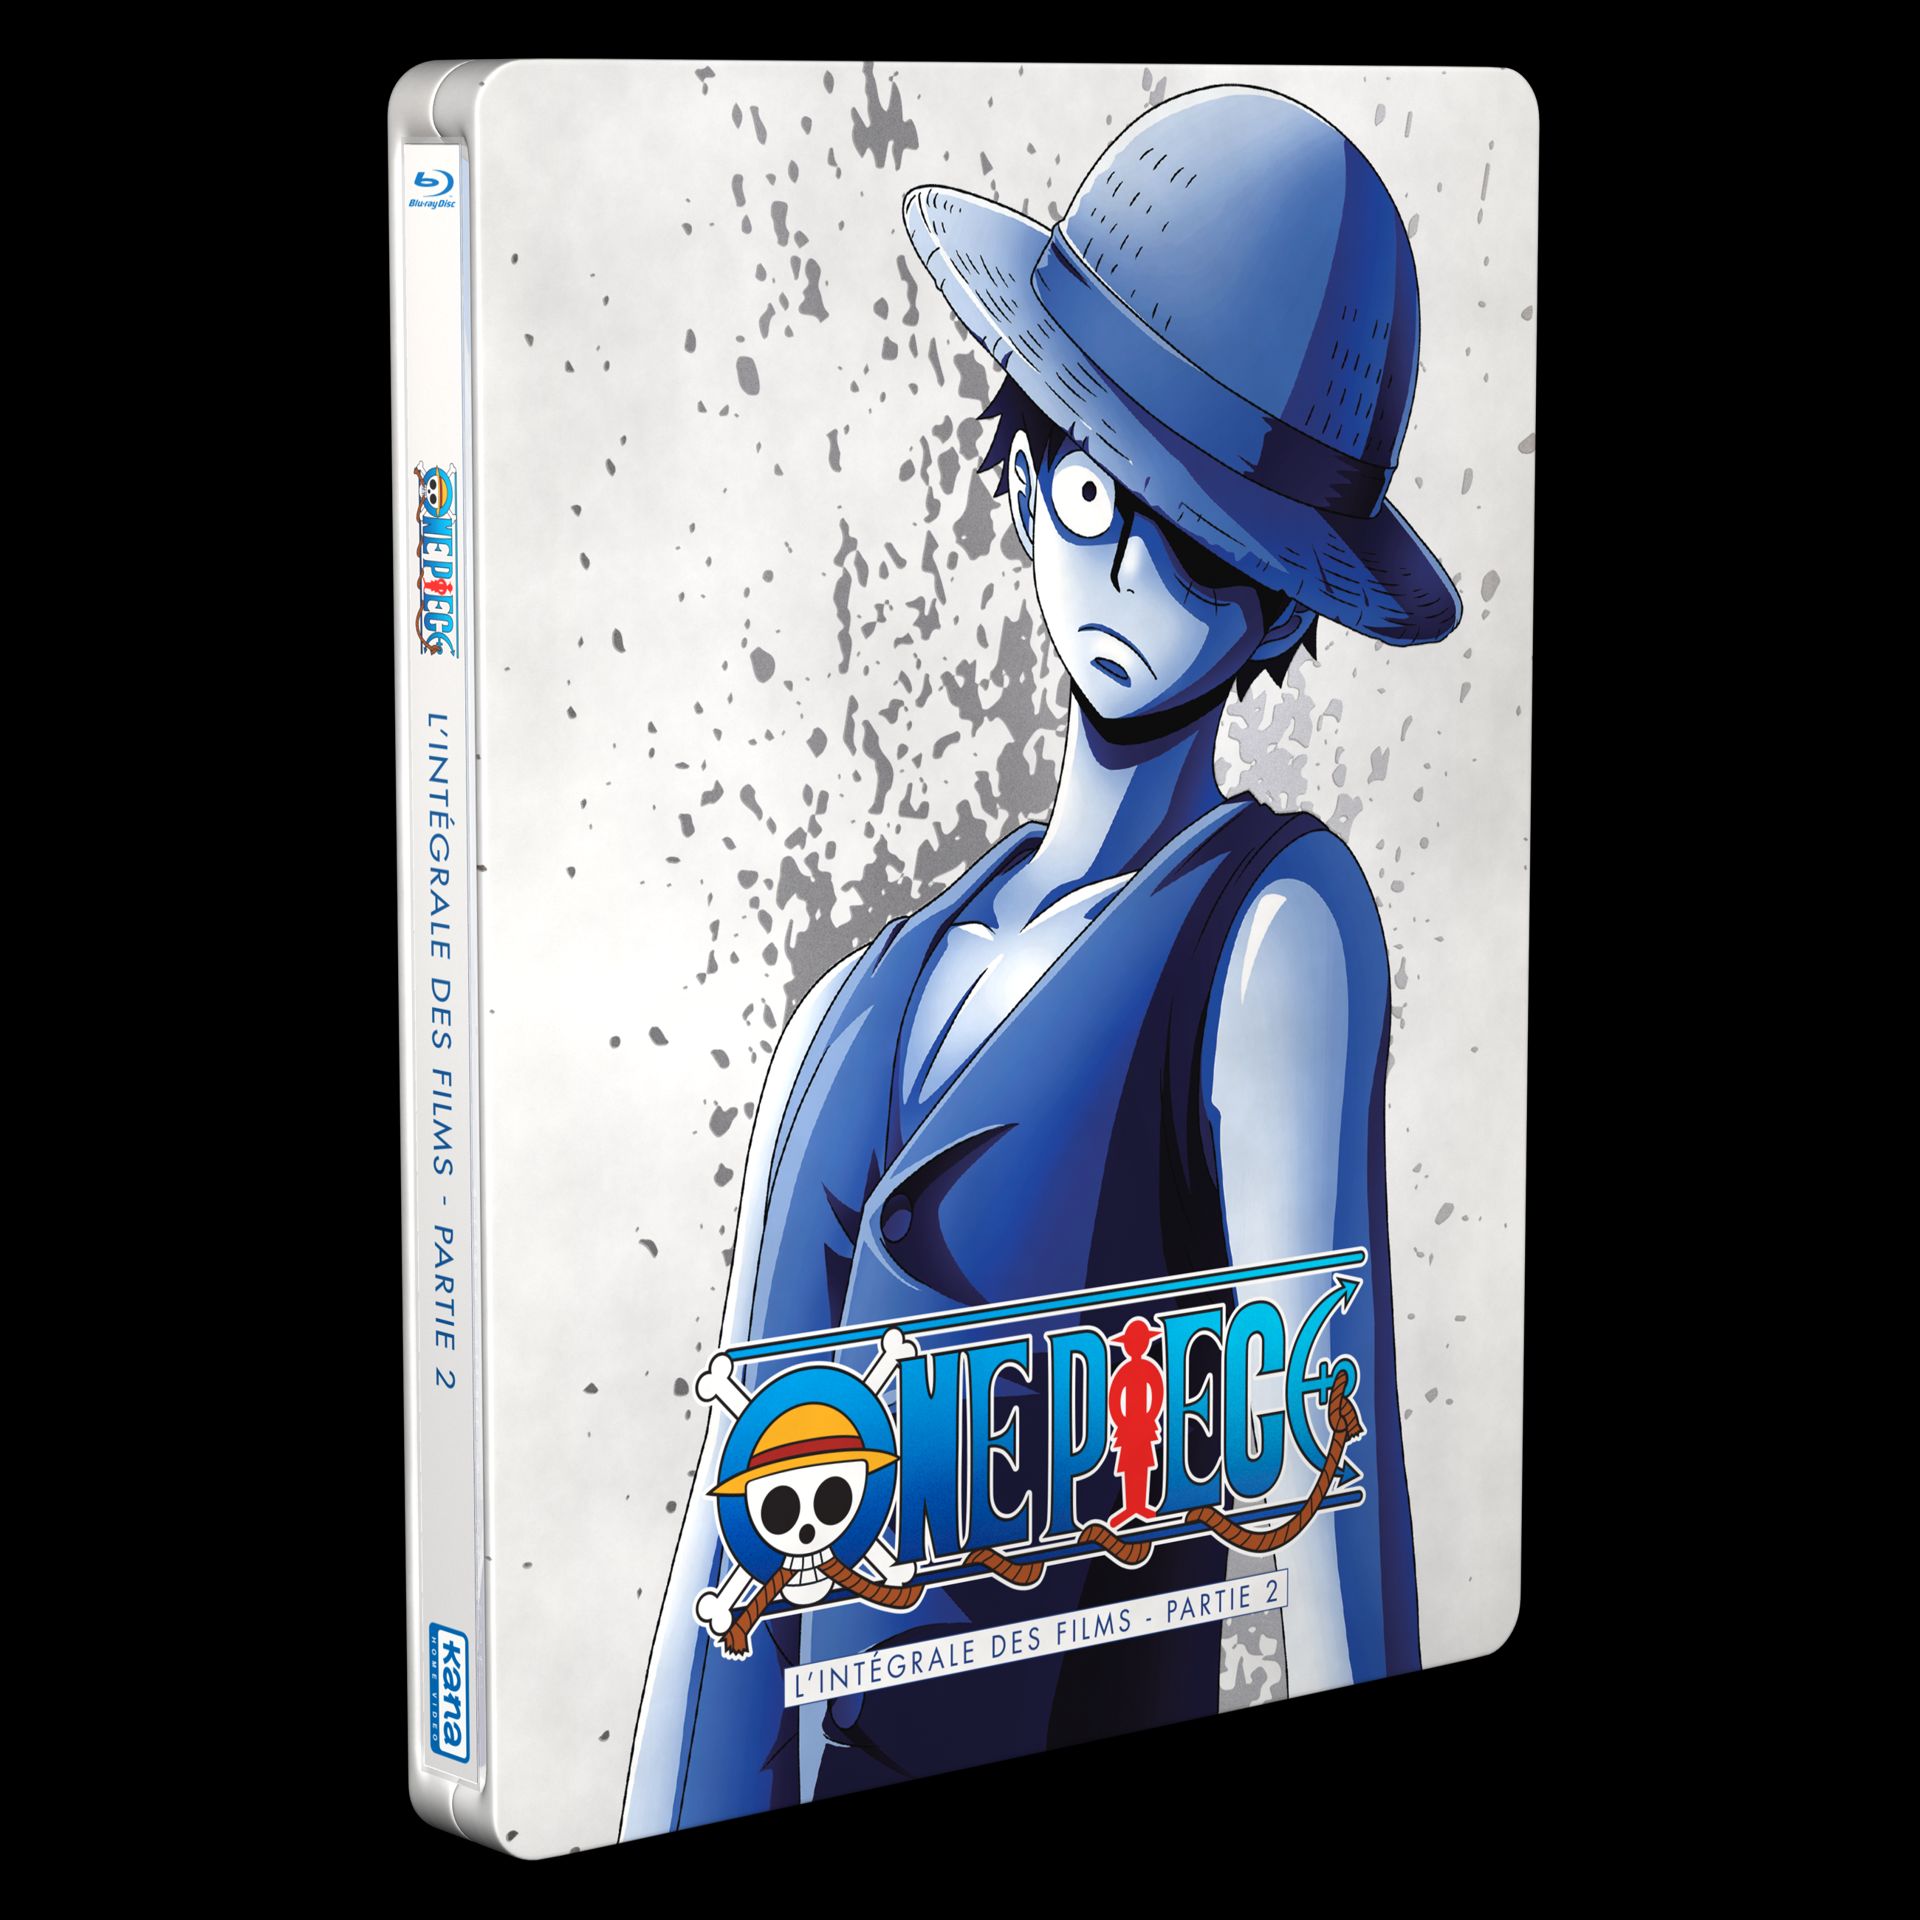 One Piece Films - Coffret 2 - Edition limitée Steelbook